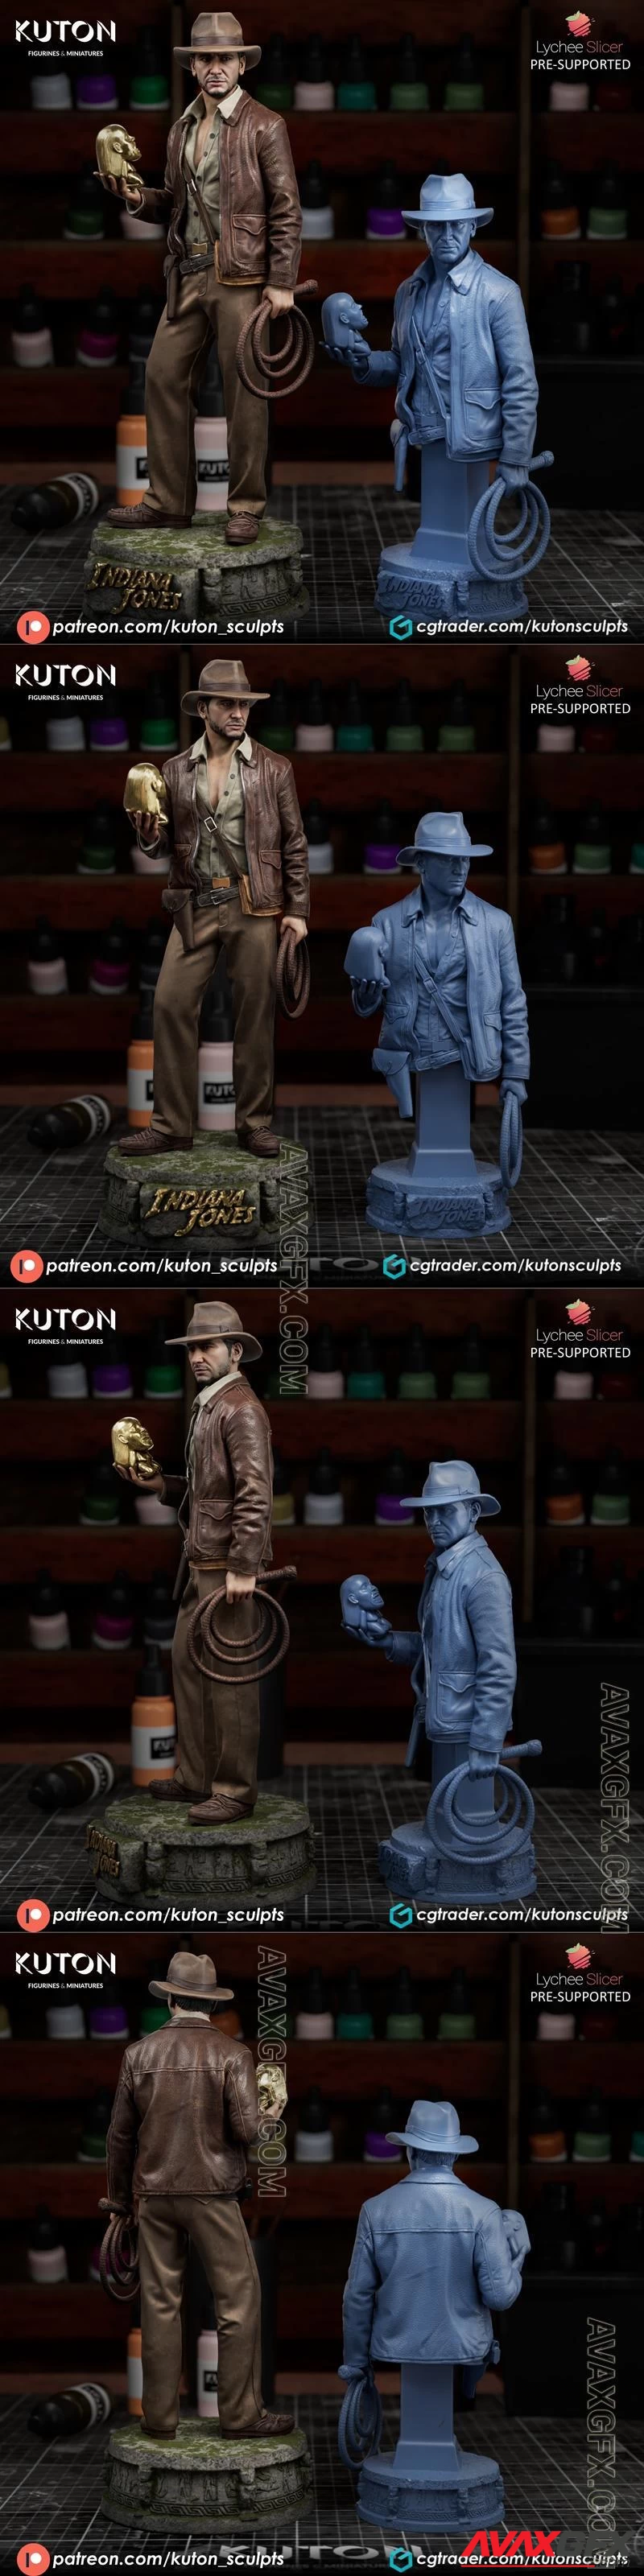 Kuton Figurines - Indiana Jones